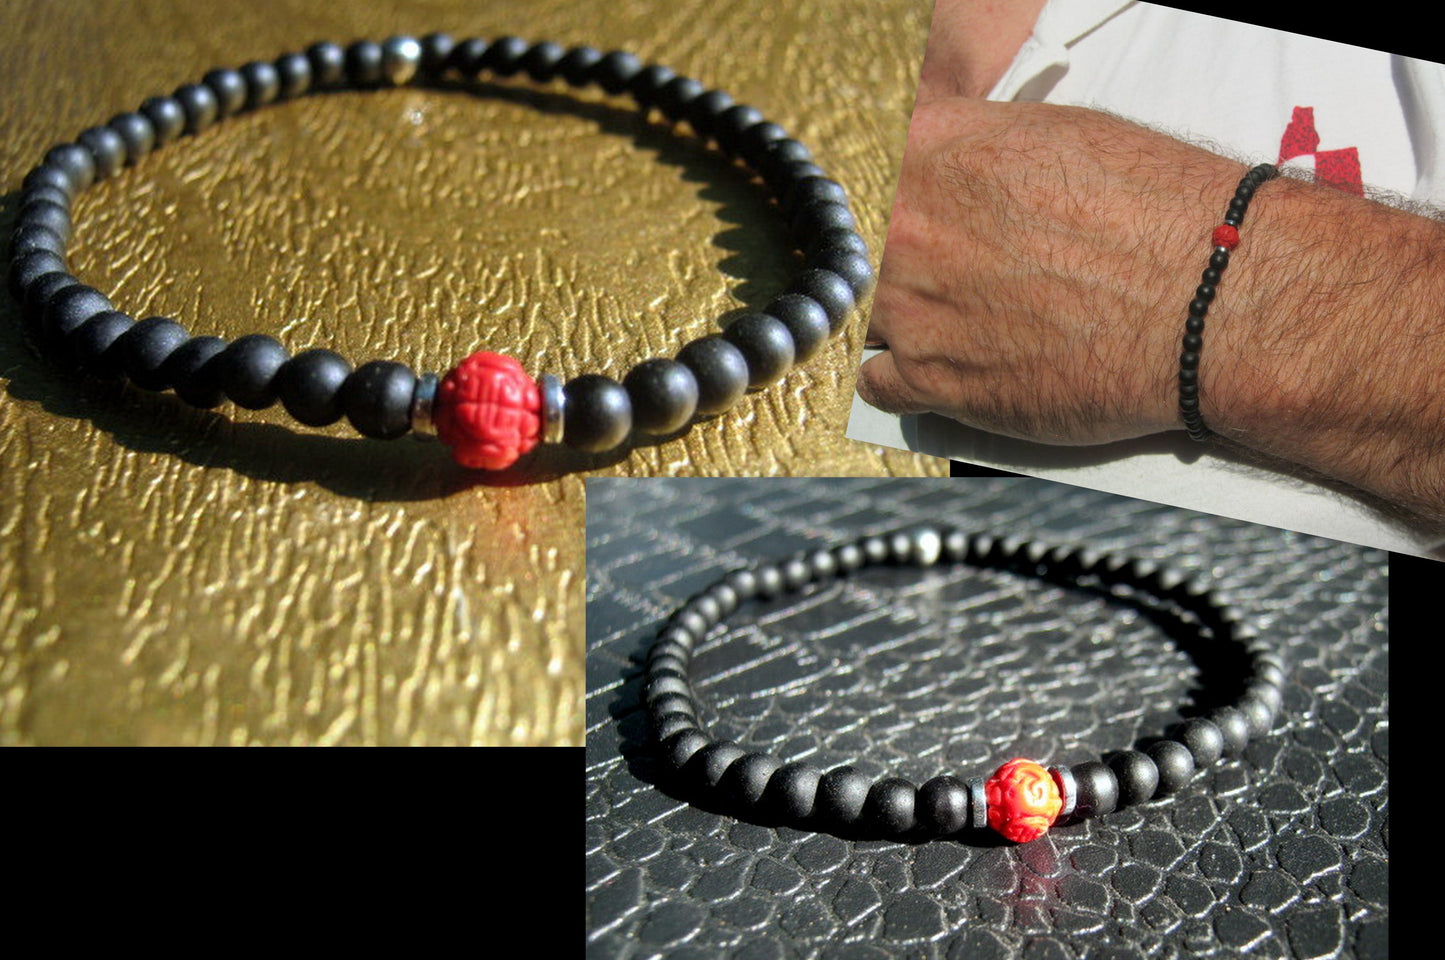 Men bracelet tiny gemstones-Coral Onyx Tourmaline Spinel black Diamonds, silver st 925, protection mantra stone handmade slim bracelet men gift